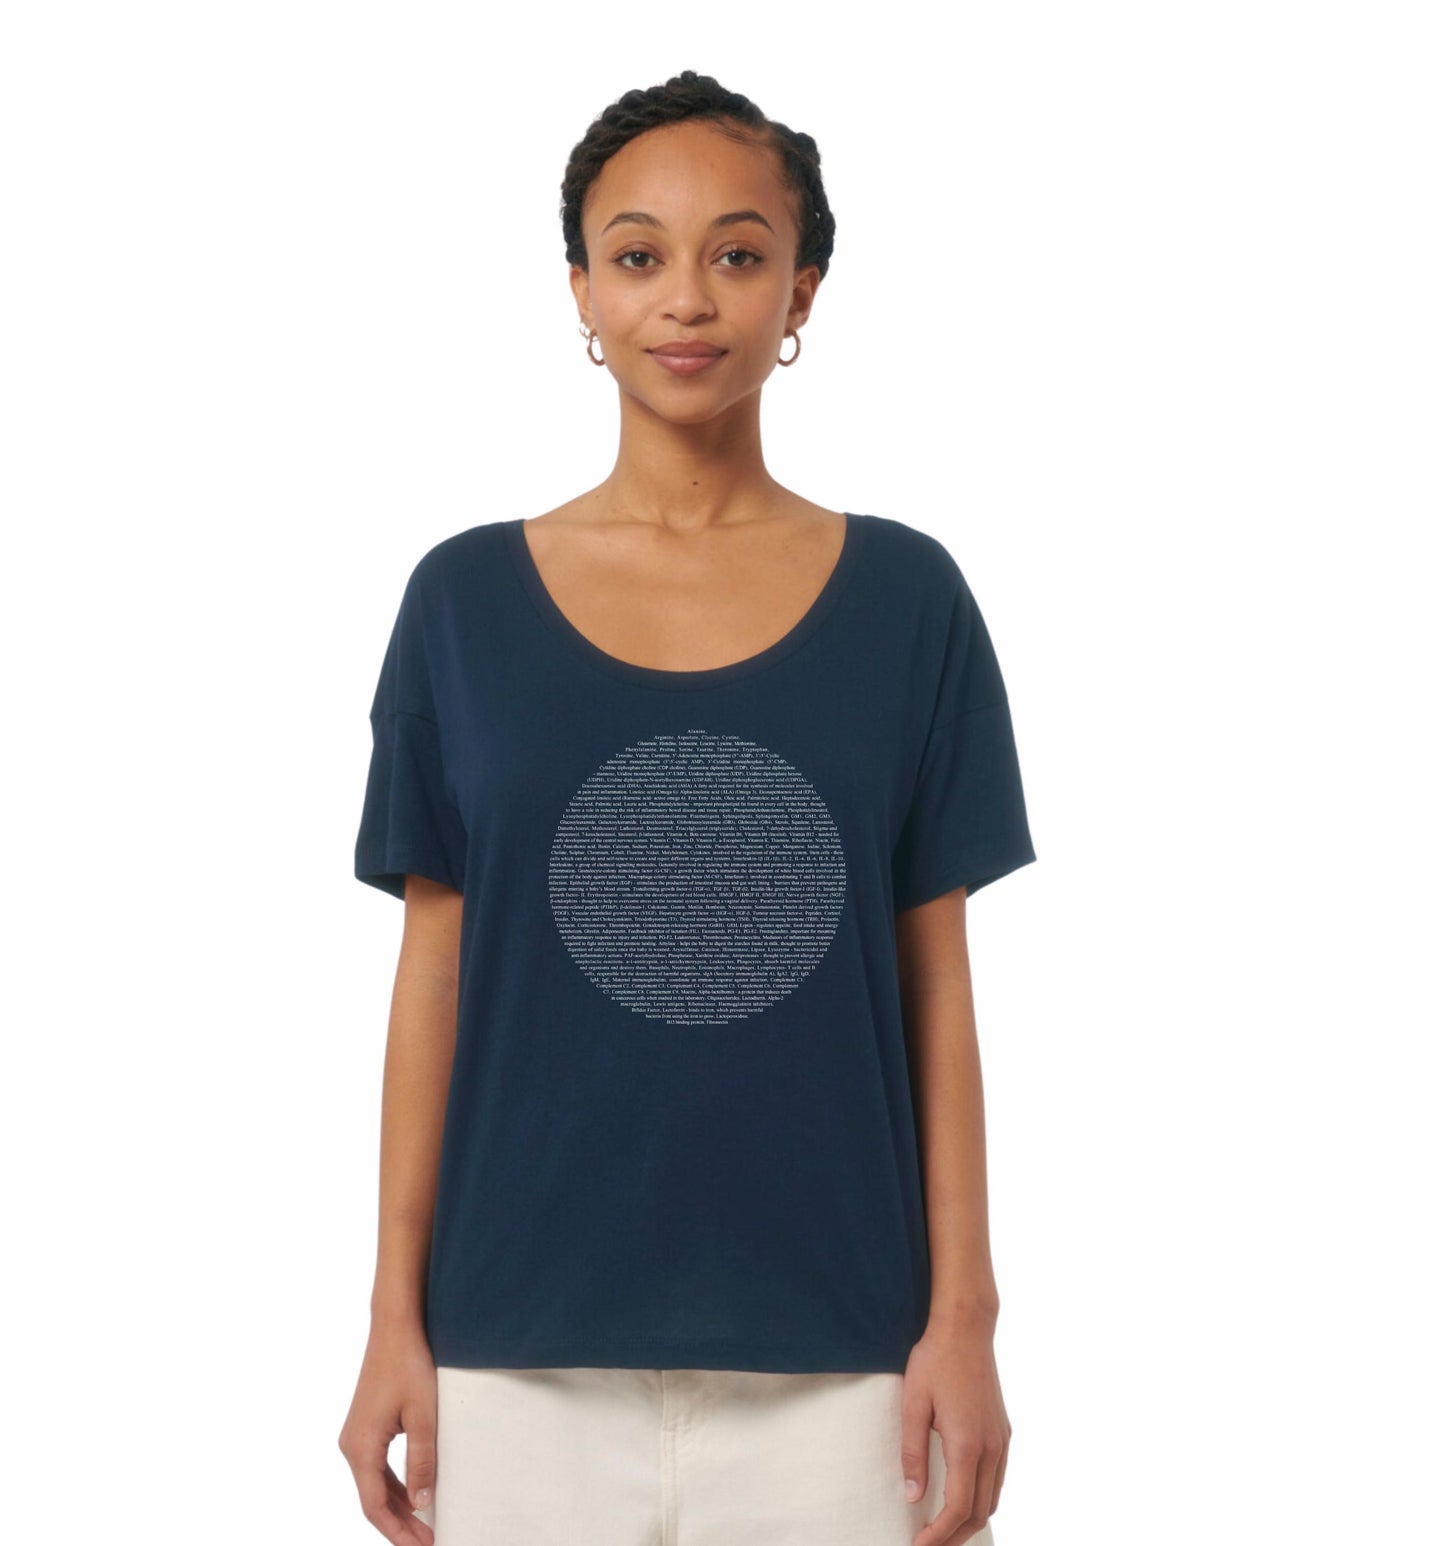 Moon T-shirt, 4 colour options